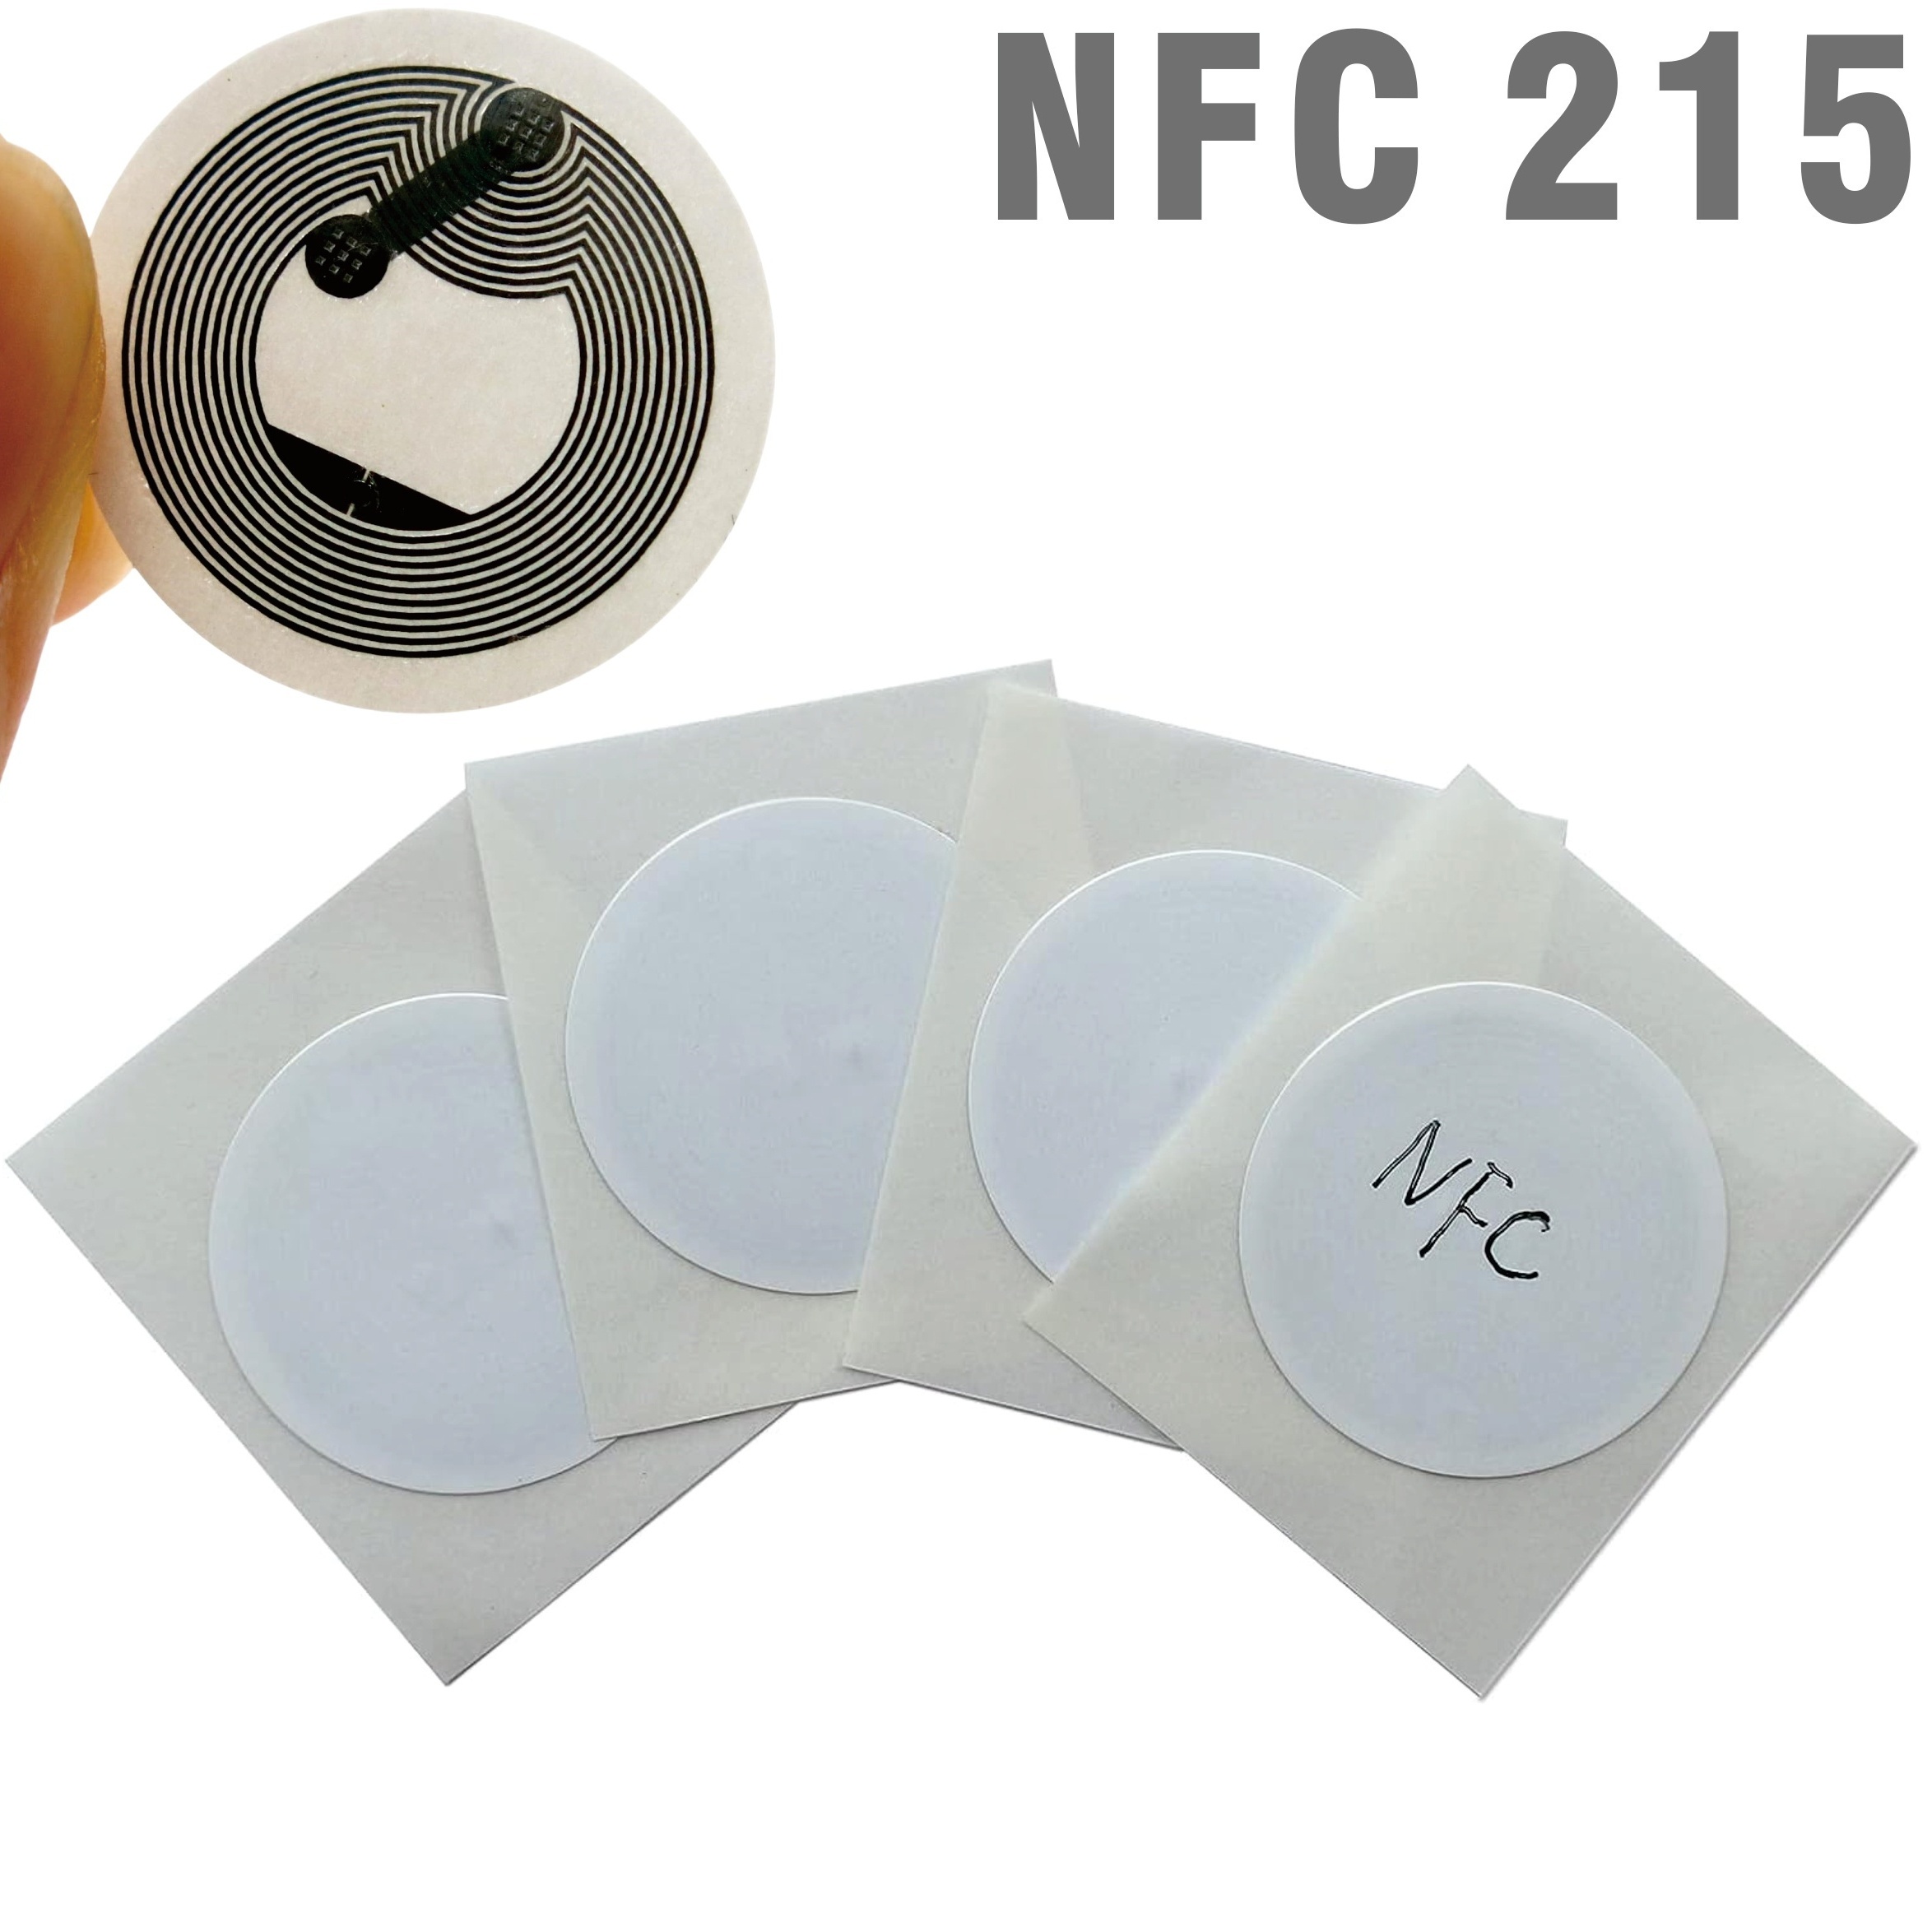 Timeskey NFC Tags NTAG215 NFC Keytags Colorful NFC Fob Rewritable NFC 215 Tag NFC Business Card Programmable NFC Tag 504 Bytes Memory,Compatible